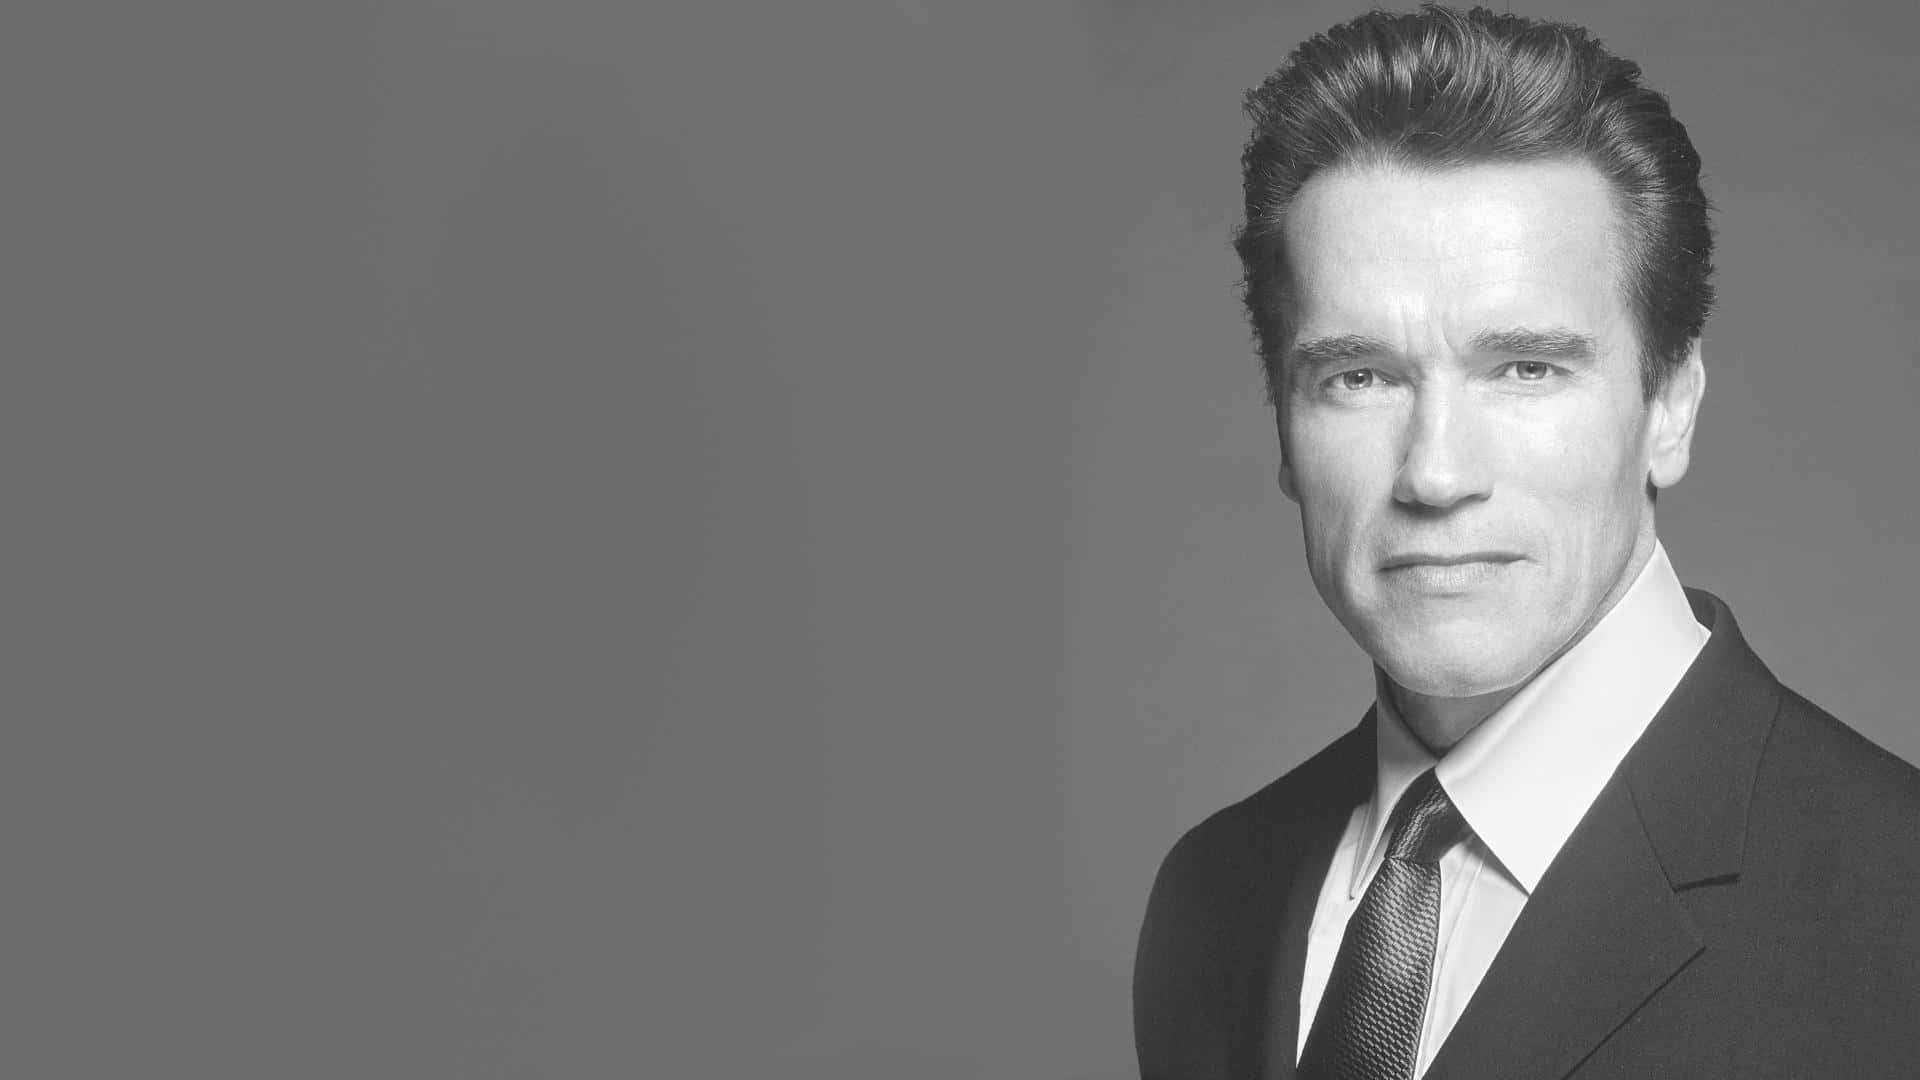 Arnold Schwarzenegger, the iconic action hero